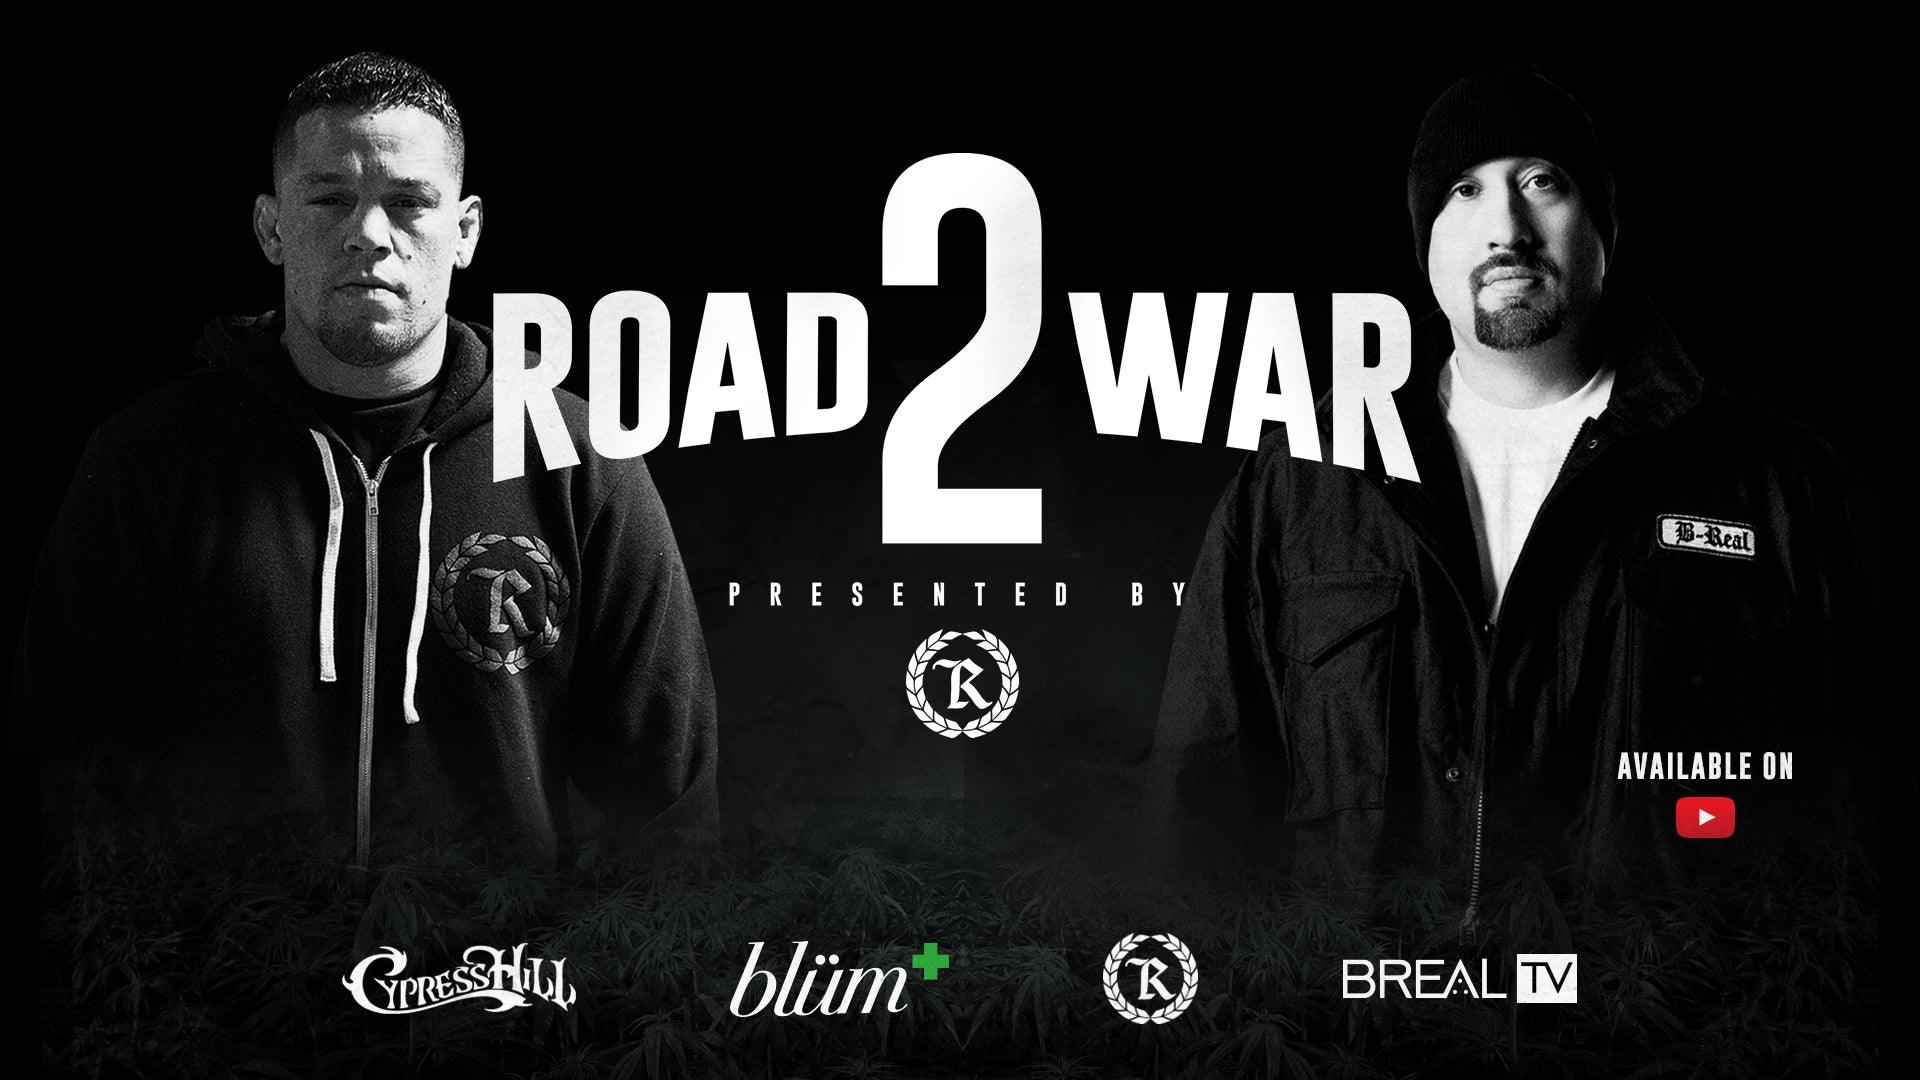 Road 2 War: Nate Diaz X B-Real (Cypress Hill) at Blüm - Represent Ltd.™